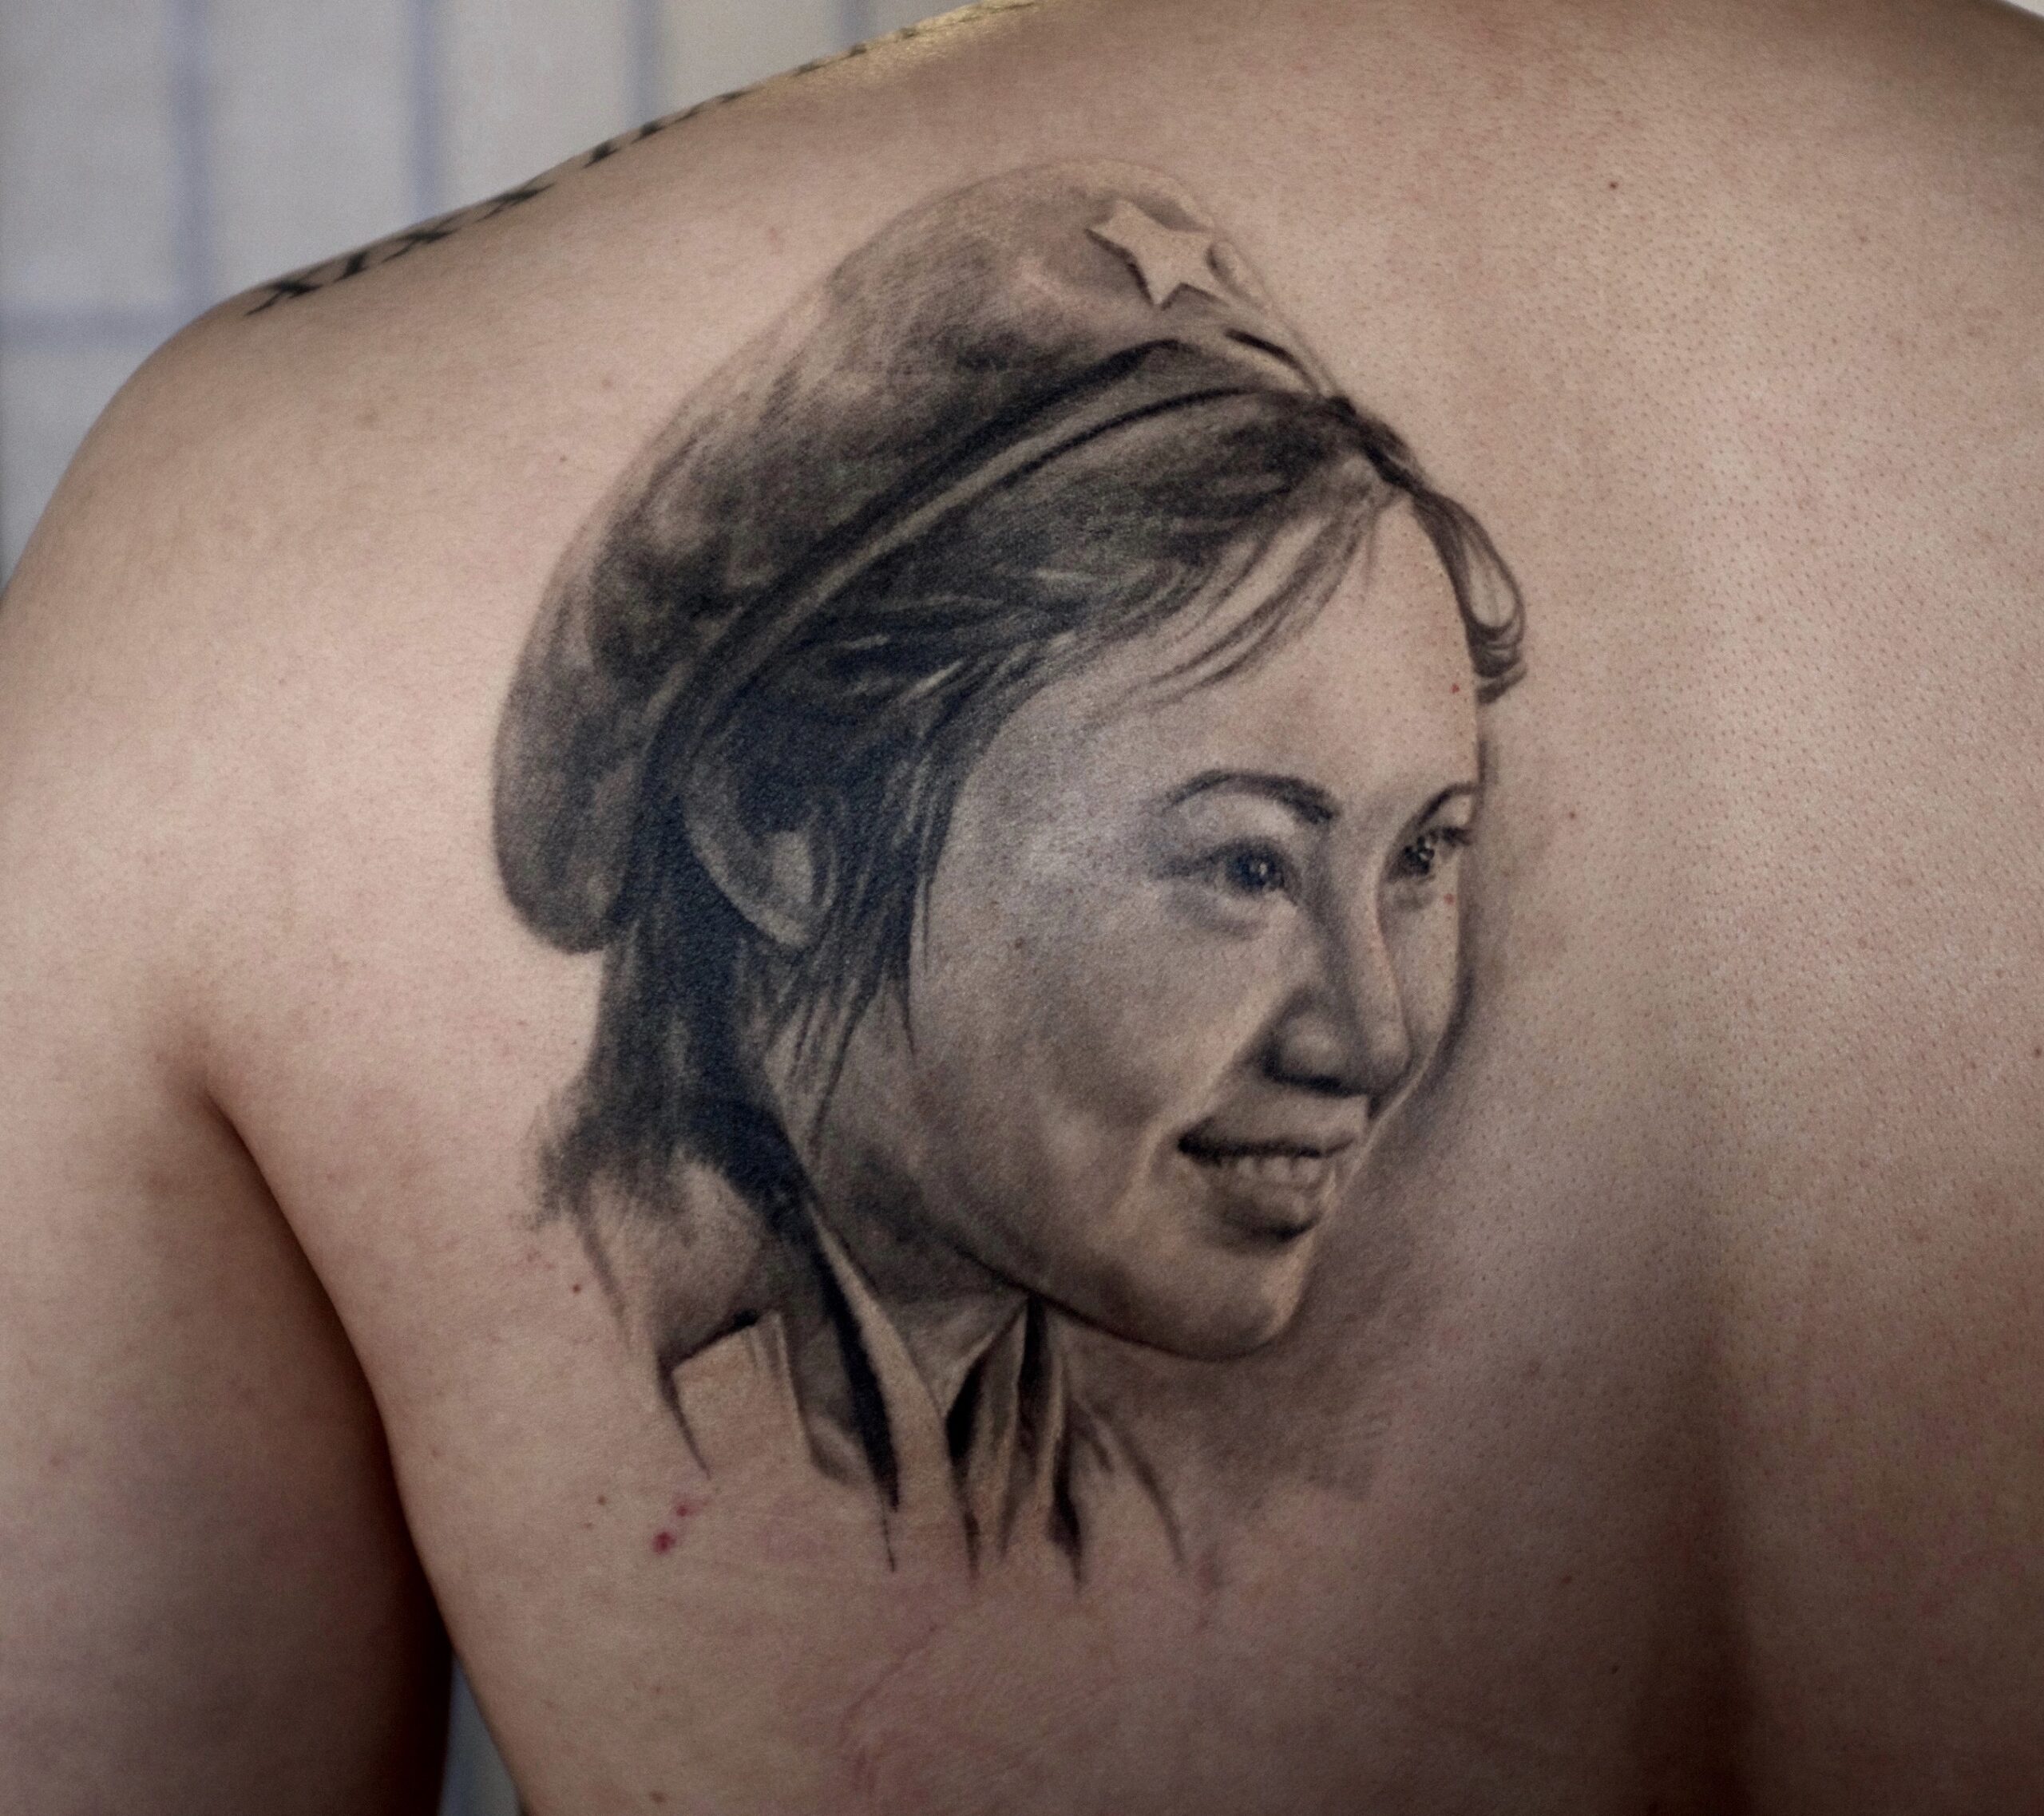 zhuo dan ting tattoo work 卓丹婷纹身作品 老照片肖像纹身 1